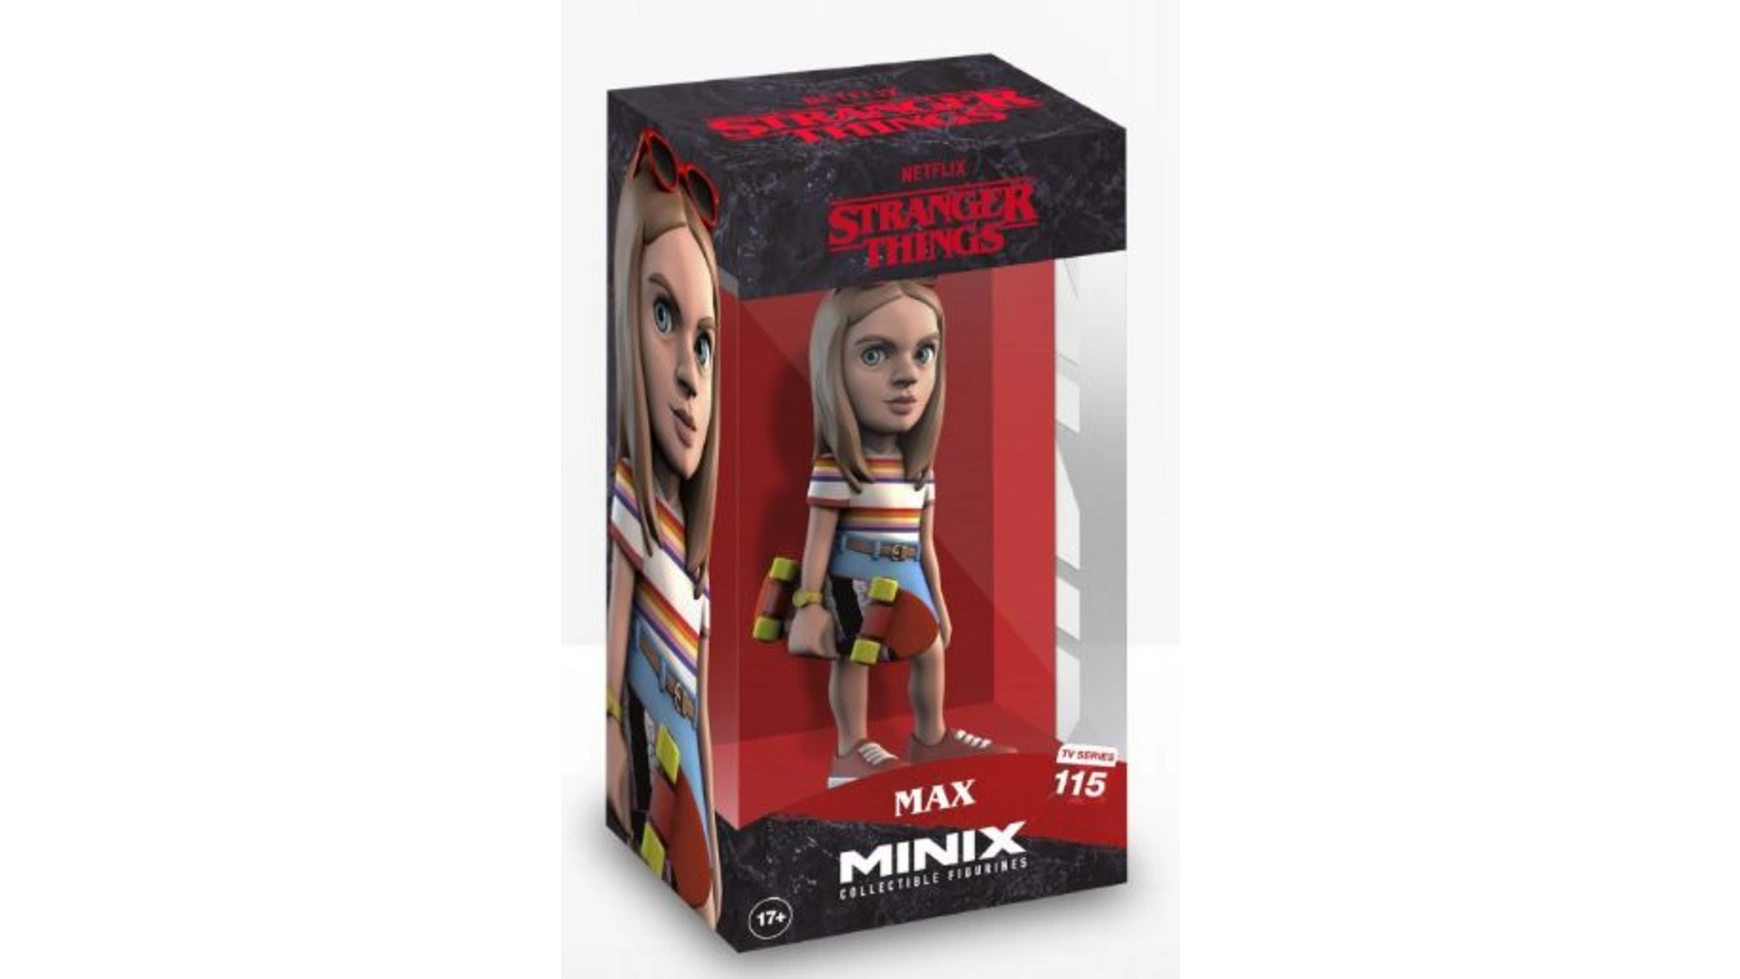 Minix Stranger Things Макс фигурка 12 см